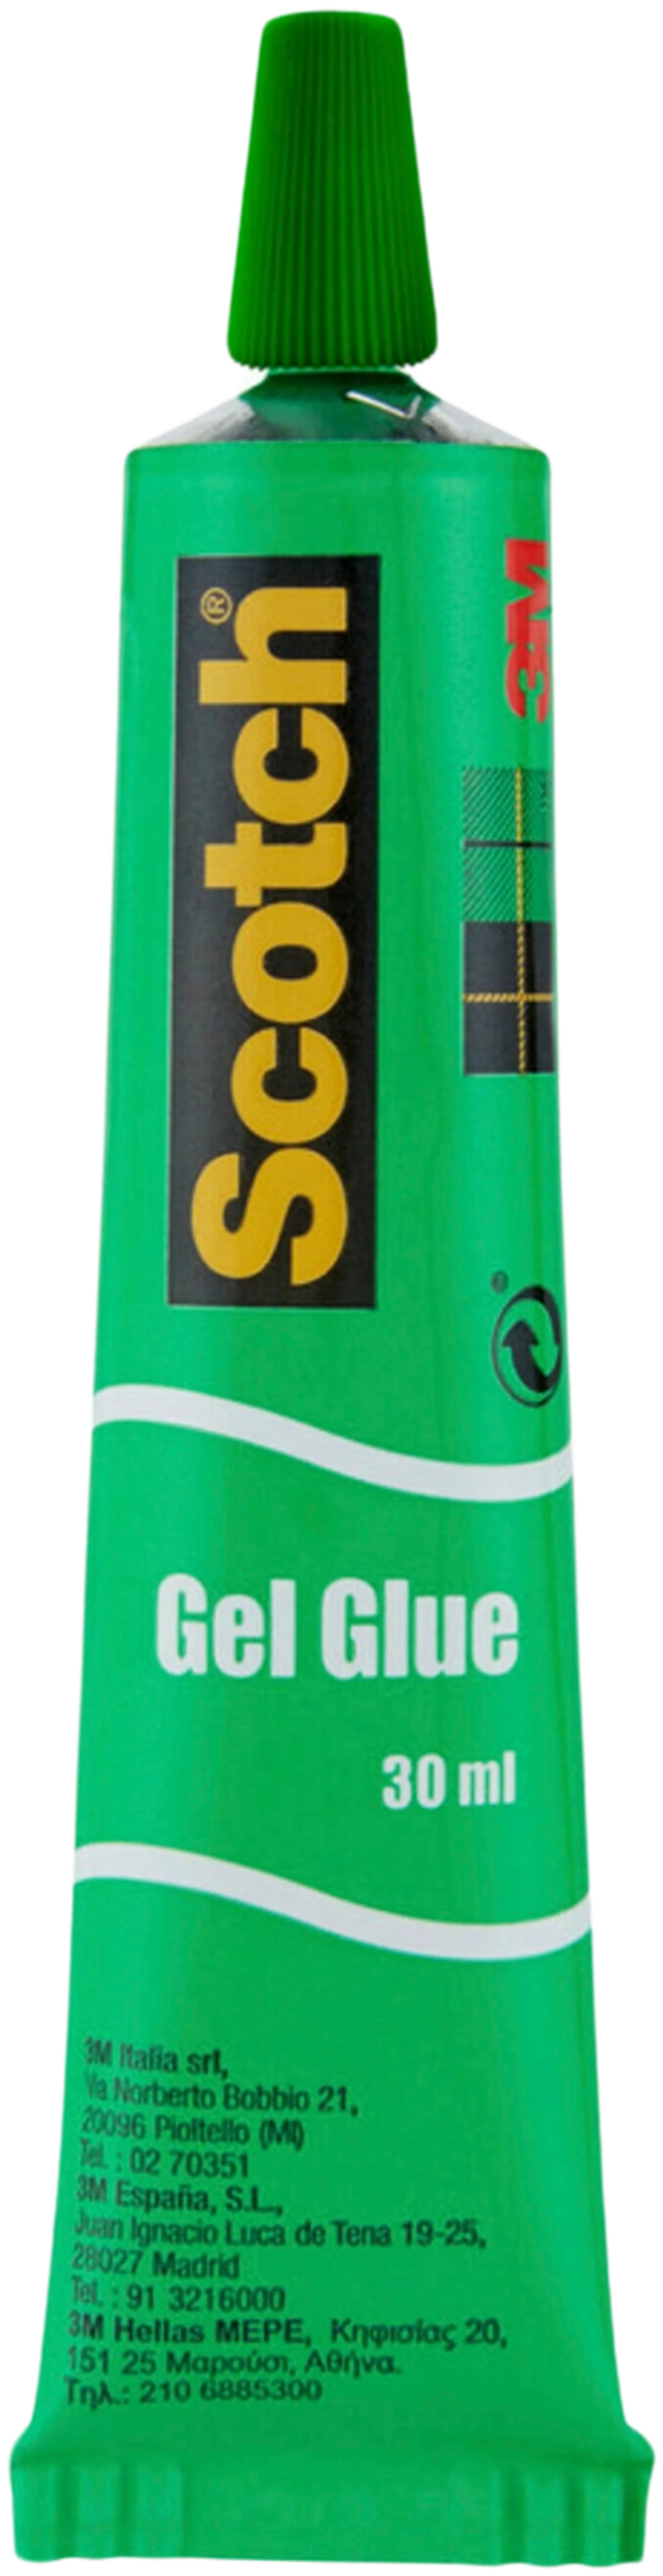 Scotch®-geeliliima, 30 ml, 1 tuubi/pakkaus - 3